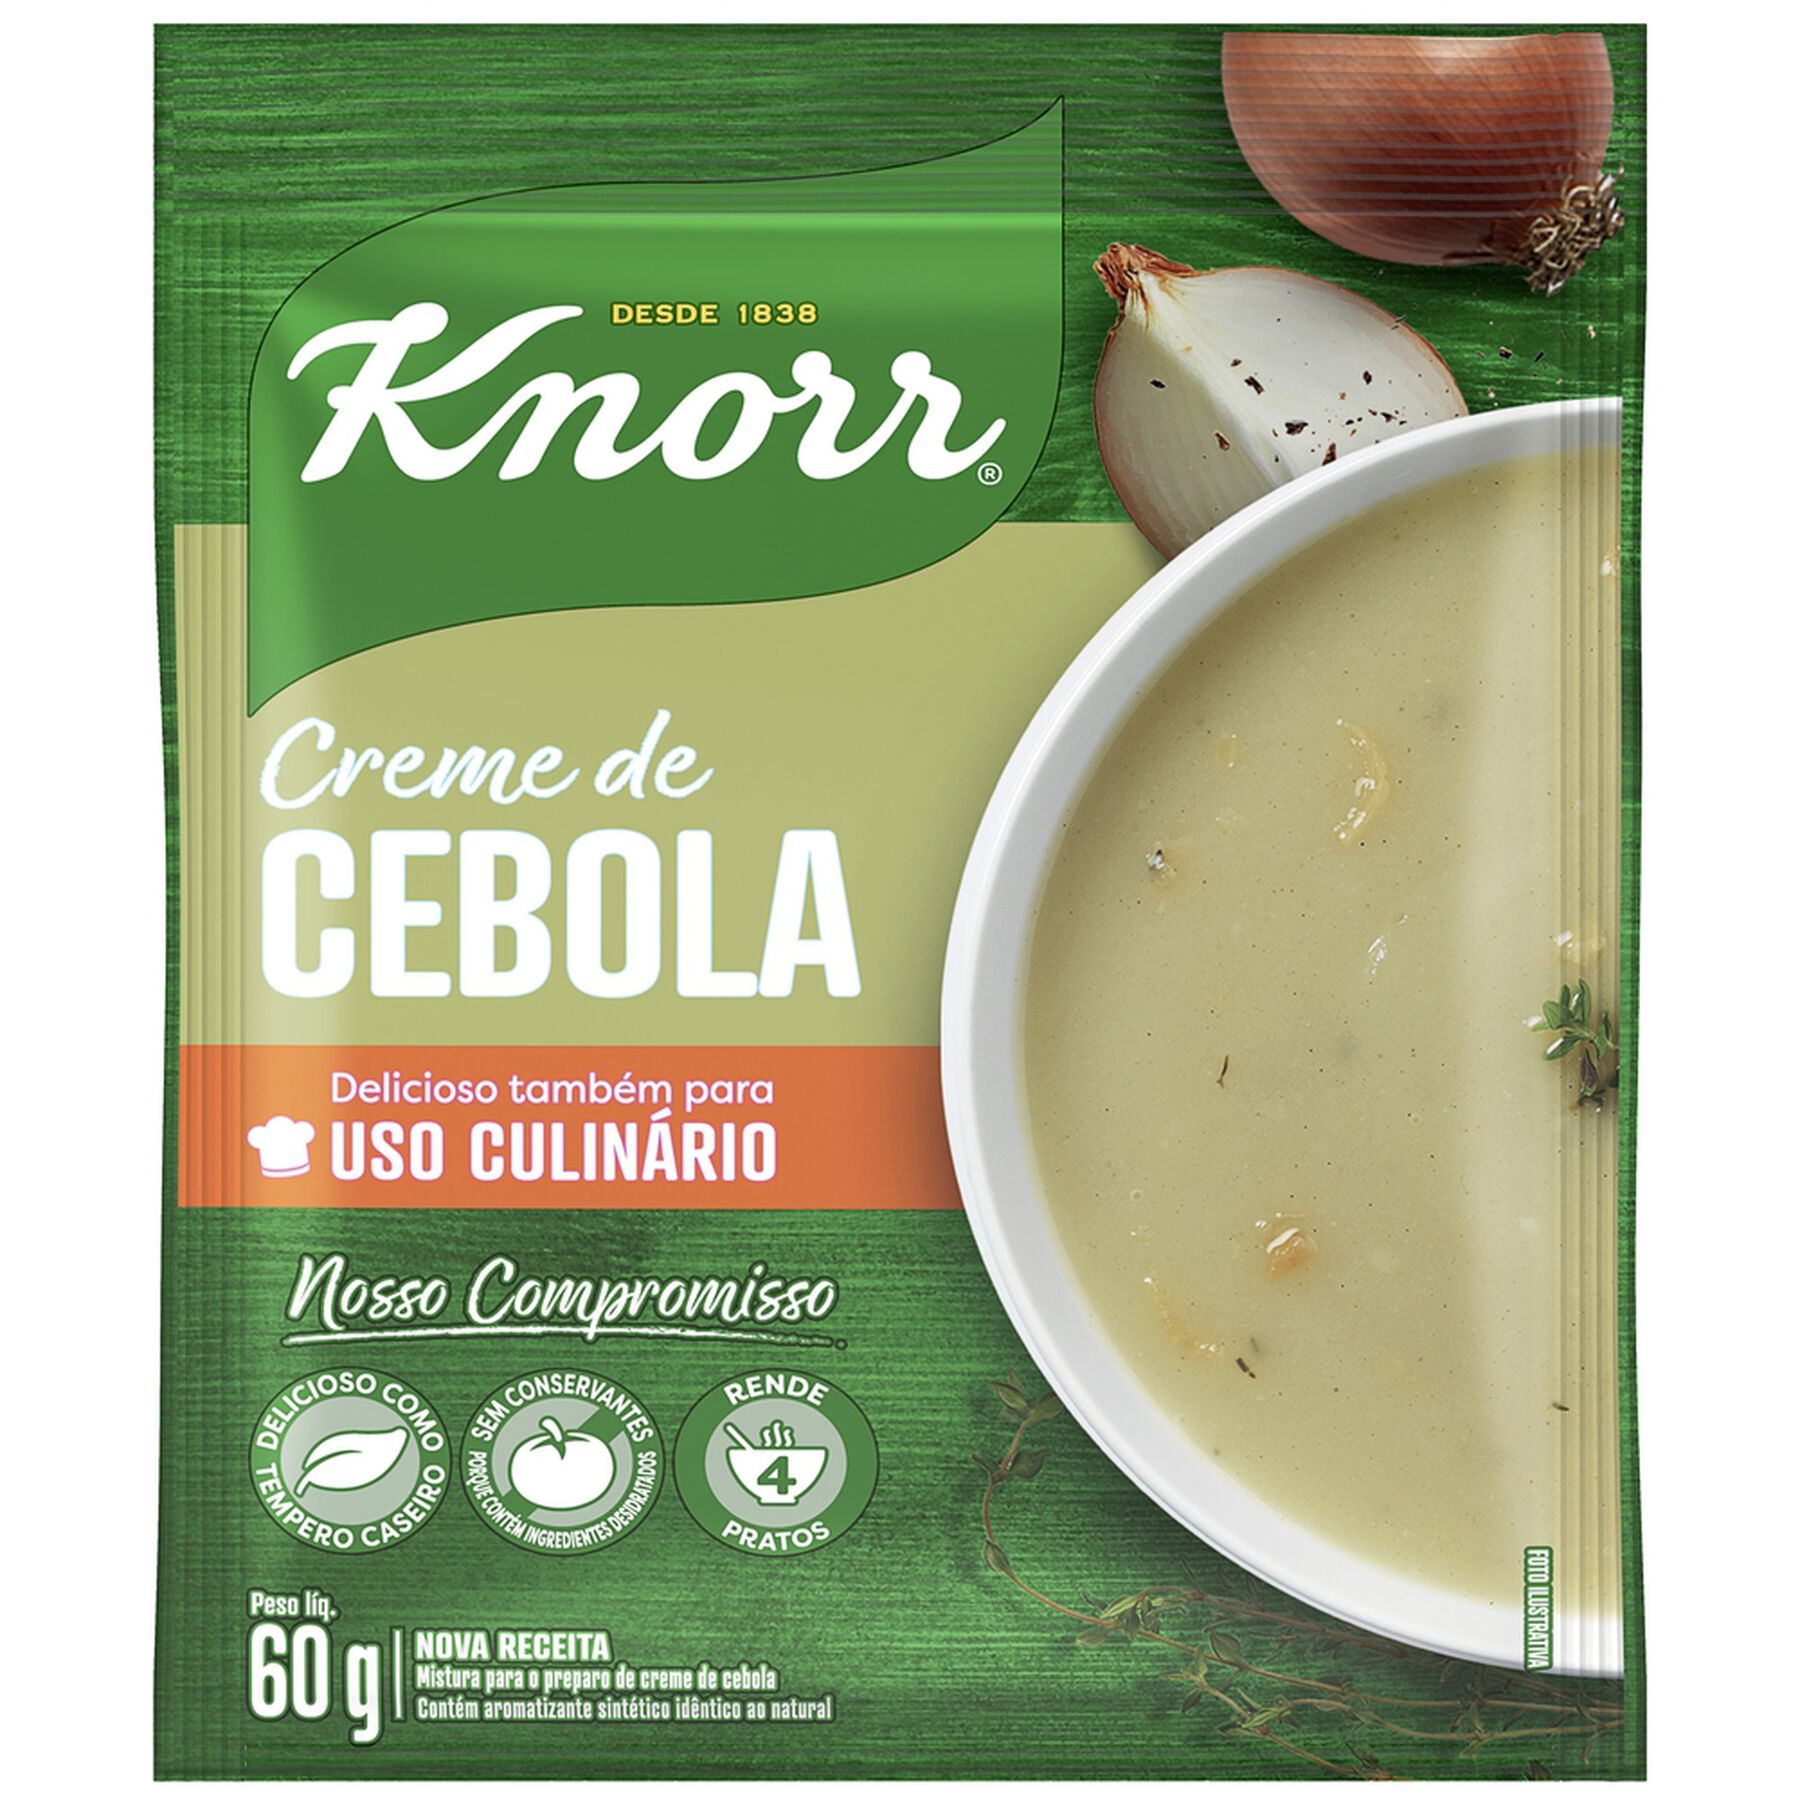 Creme Cebola Knorr Sachê 60g